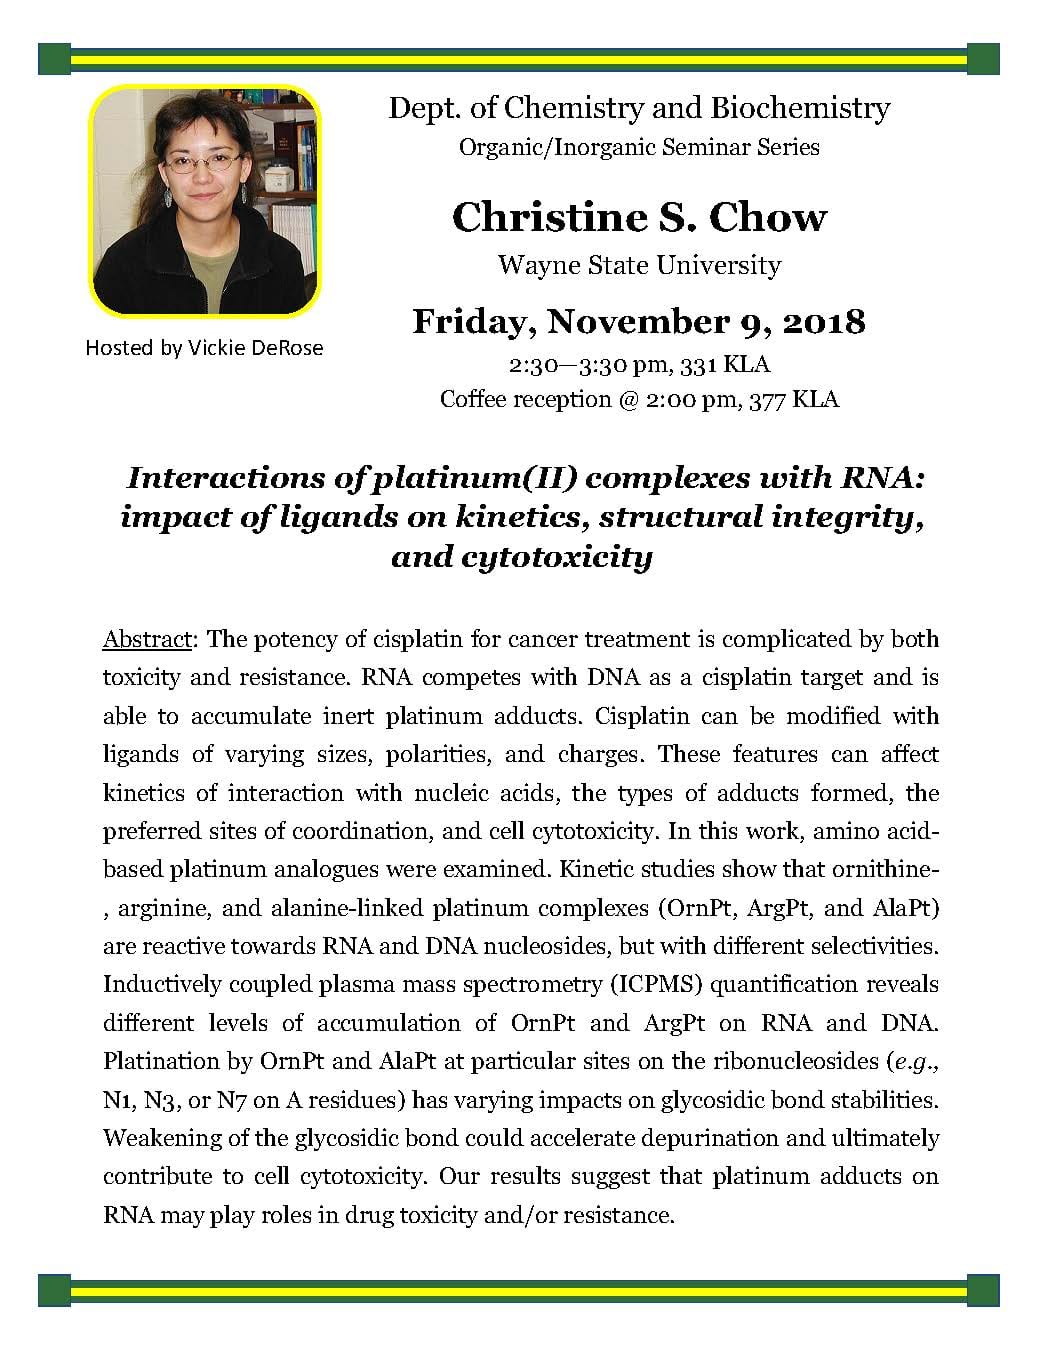 Poster - Christine Chow Seminar